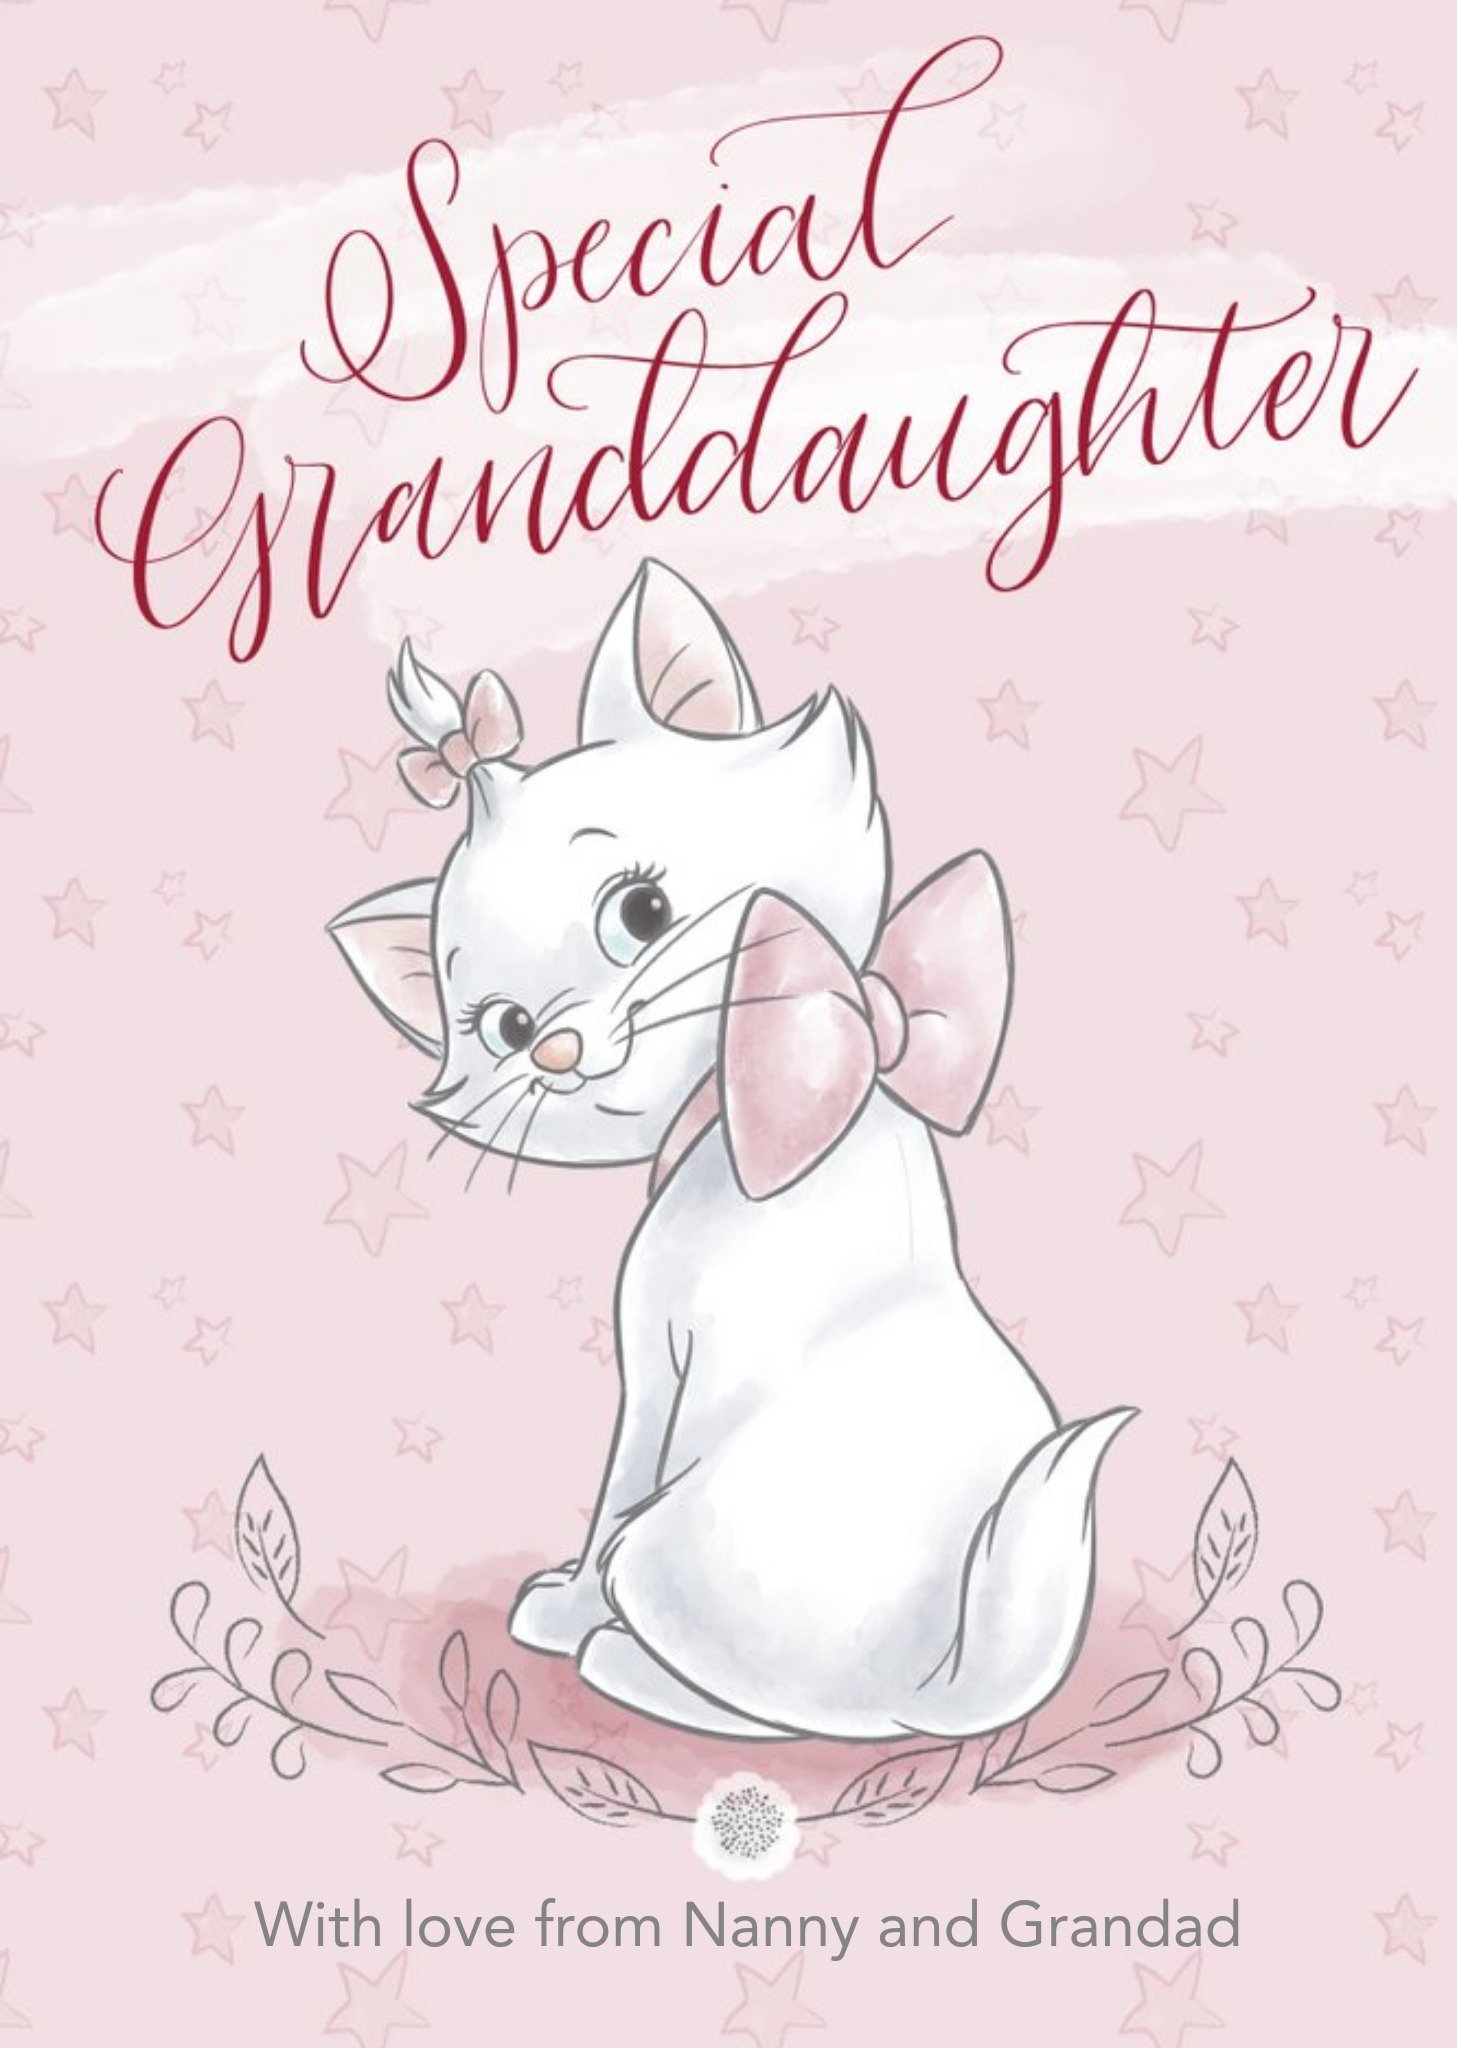 Disney Aristocats - Cute Granddaughter Birthday Card Ecard